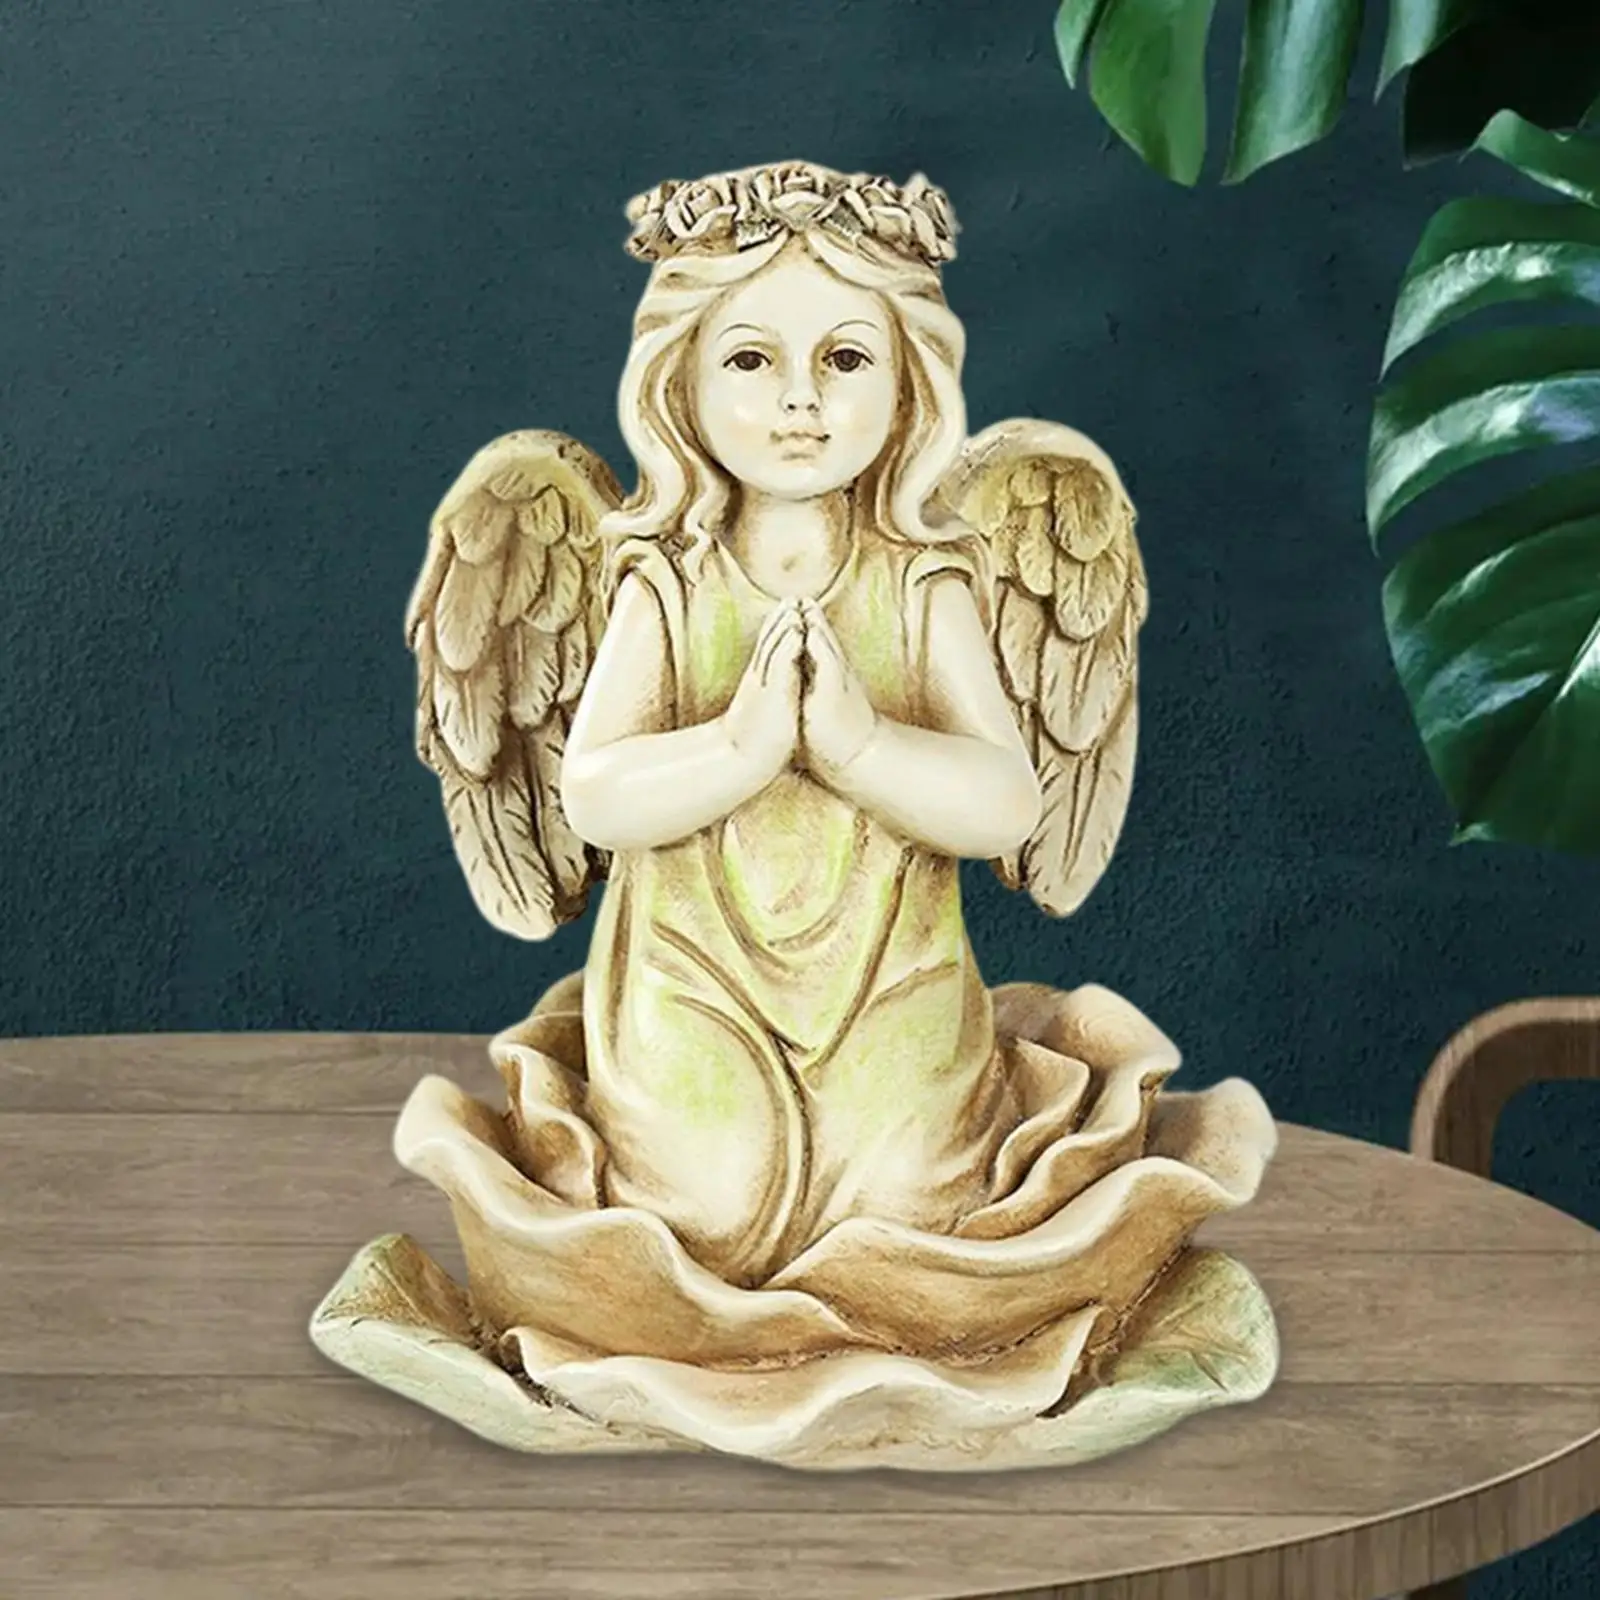 Creative Angel Statue resin material art Sculptures for Garden Outdoor Decor Office Gift